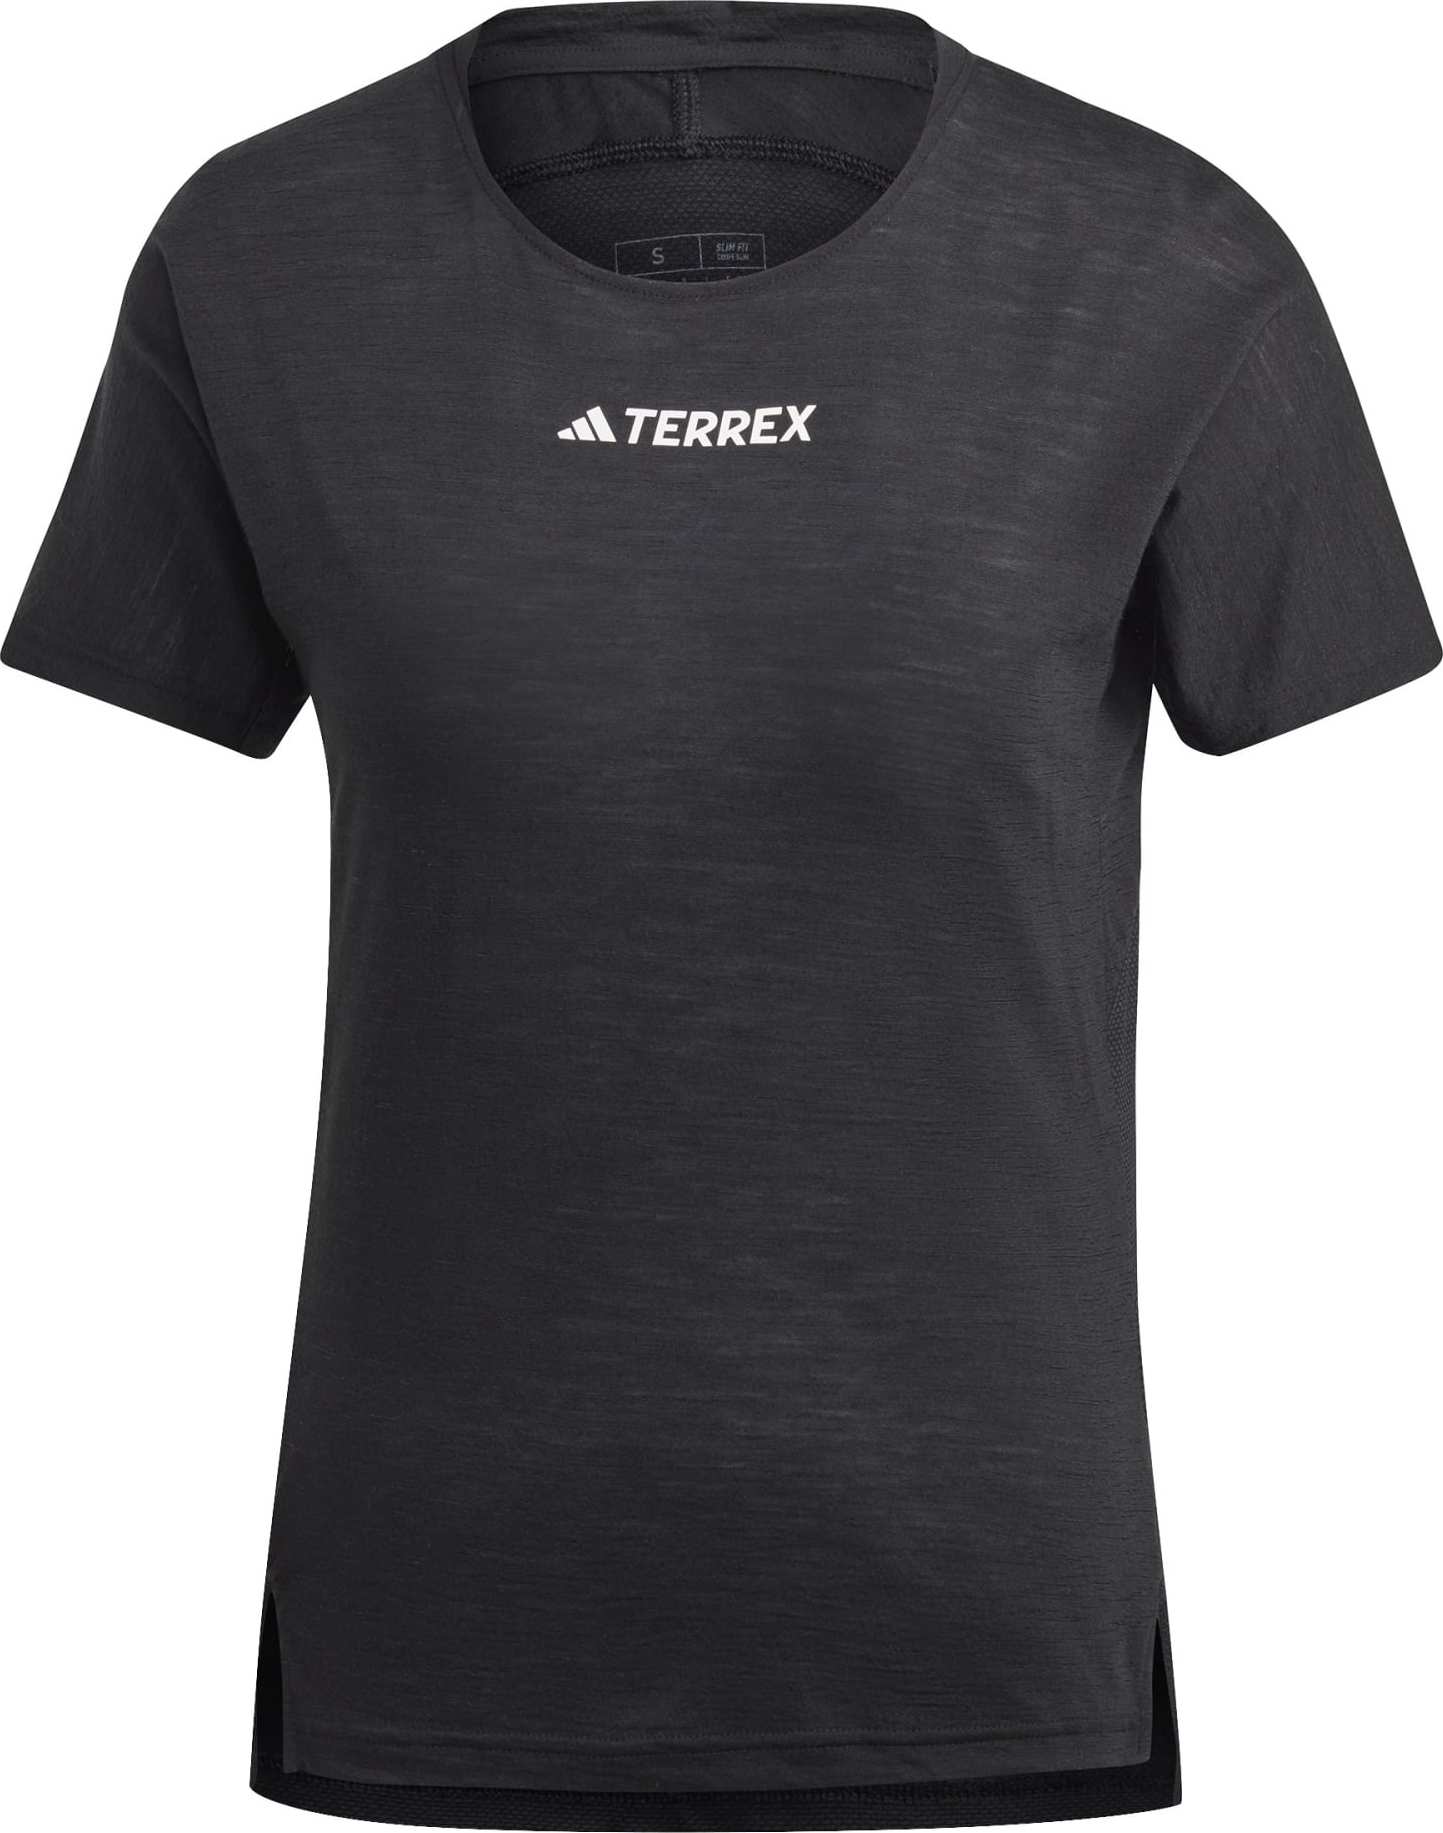 Adidas Women's Terrex Agravic Pro Wool Trail Running T-Shirt BLACK XL, BLACK